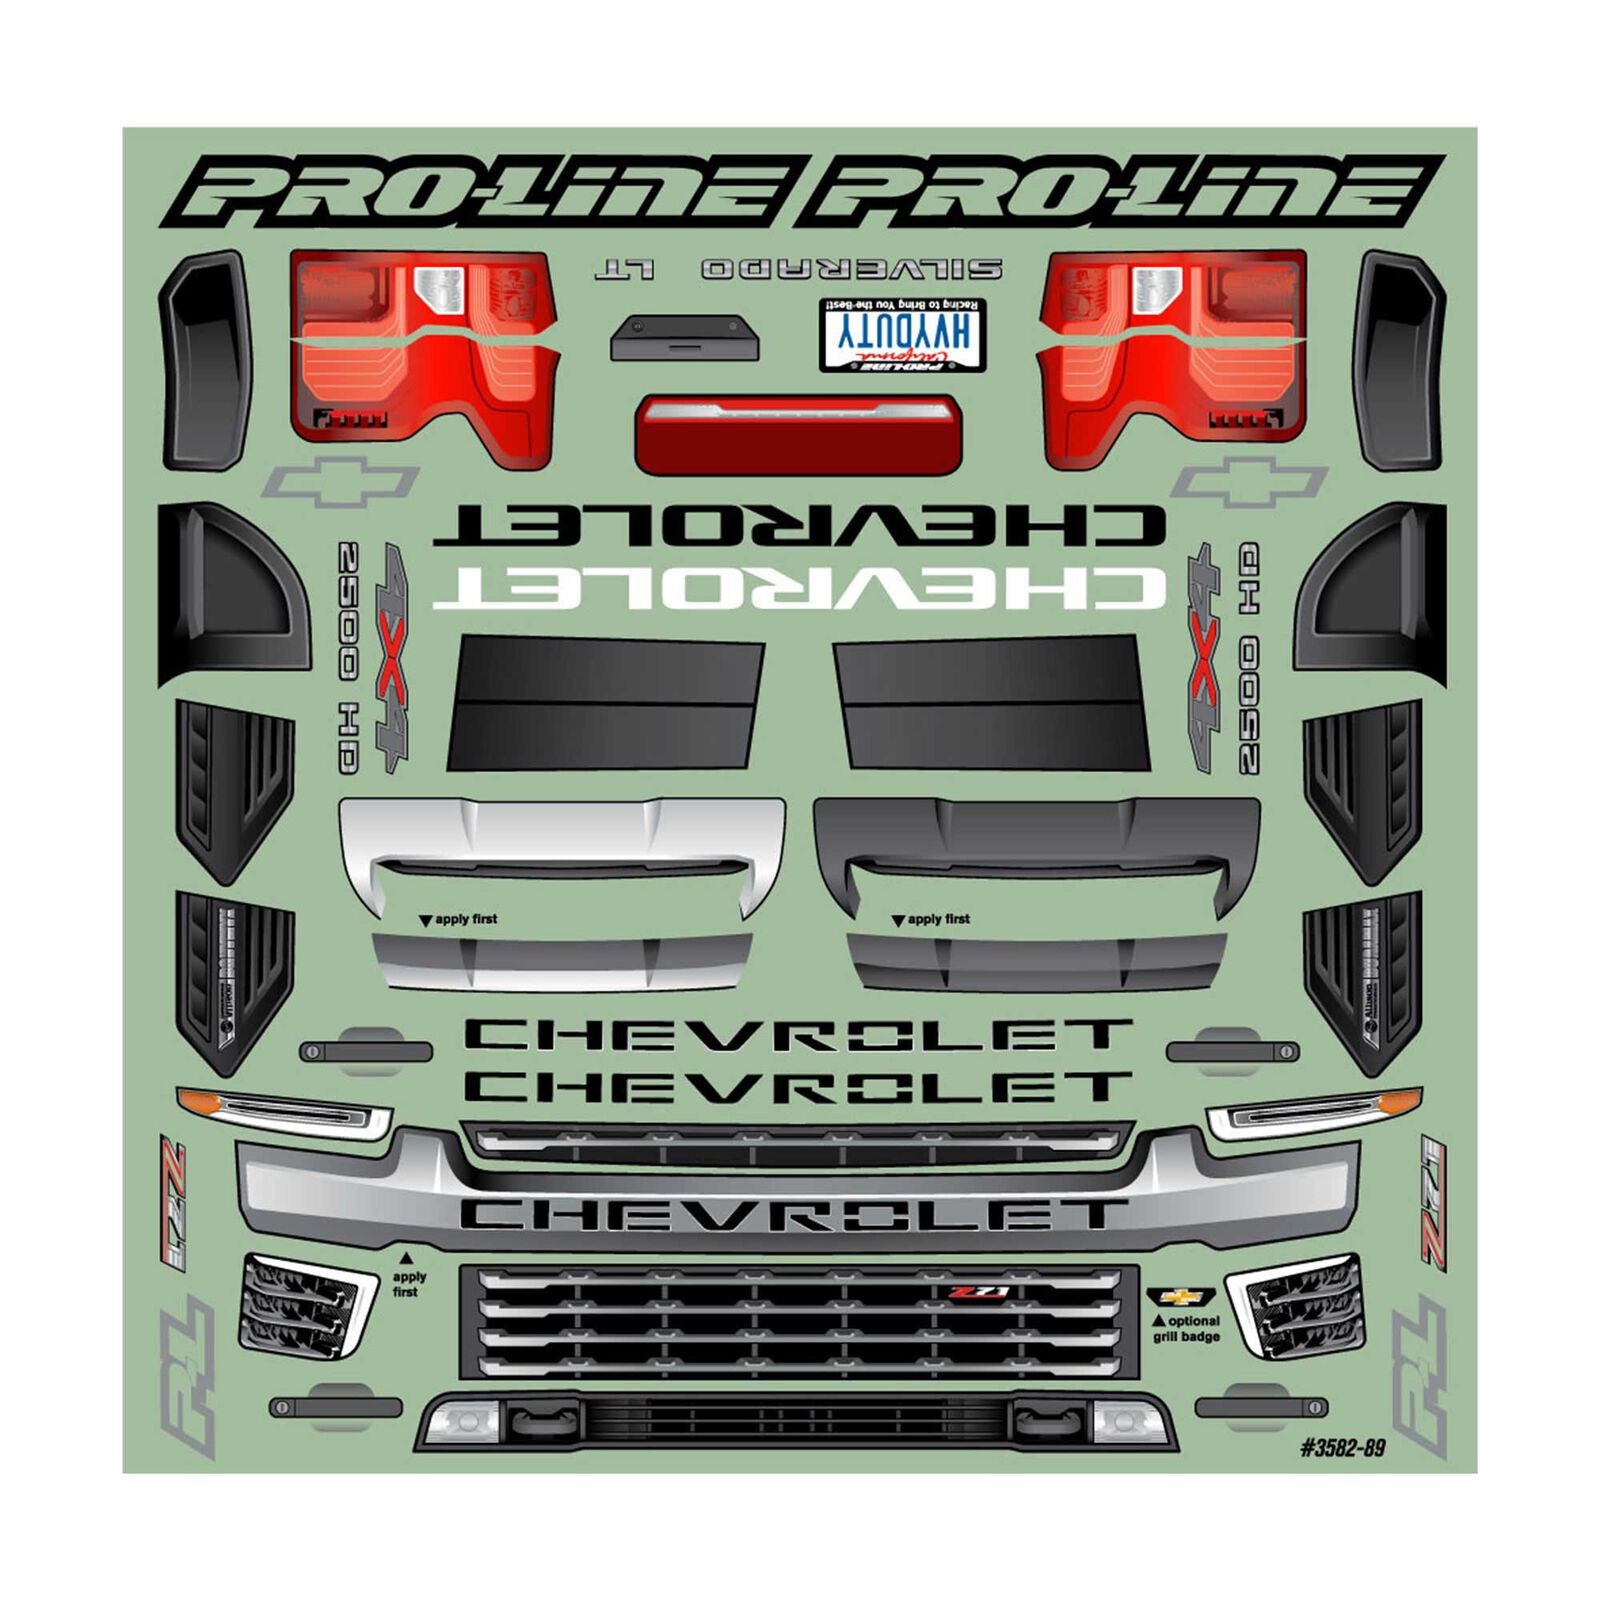 Proline Carrosserie Chevrolet Silverado 2500 HD Kraton 3592-00